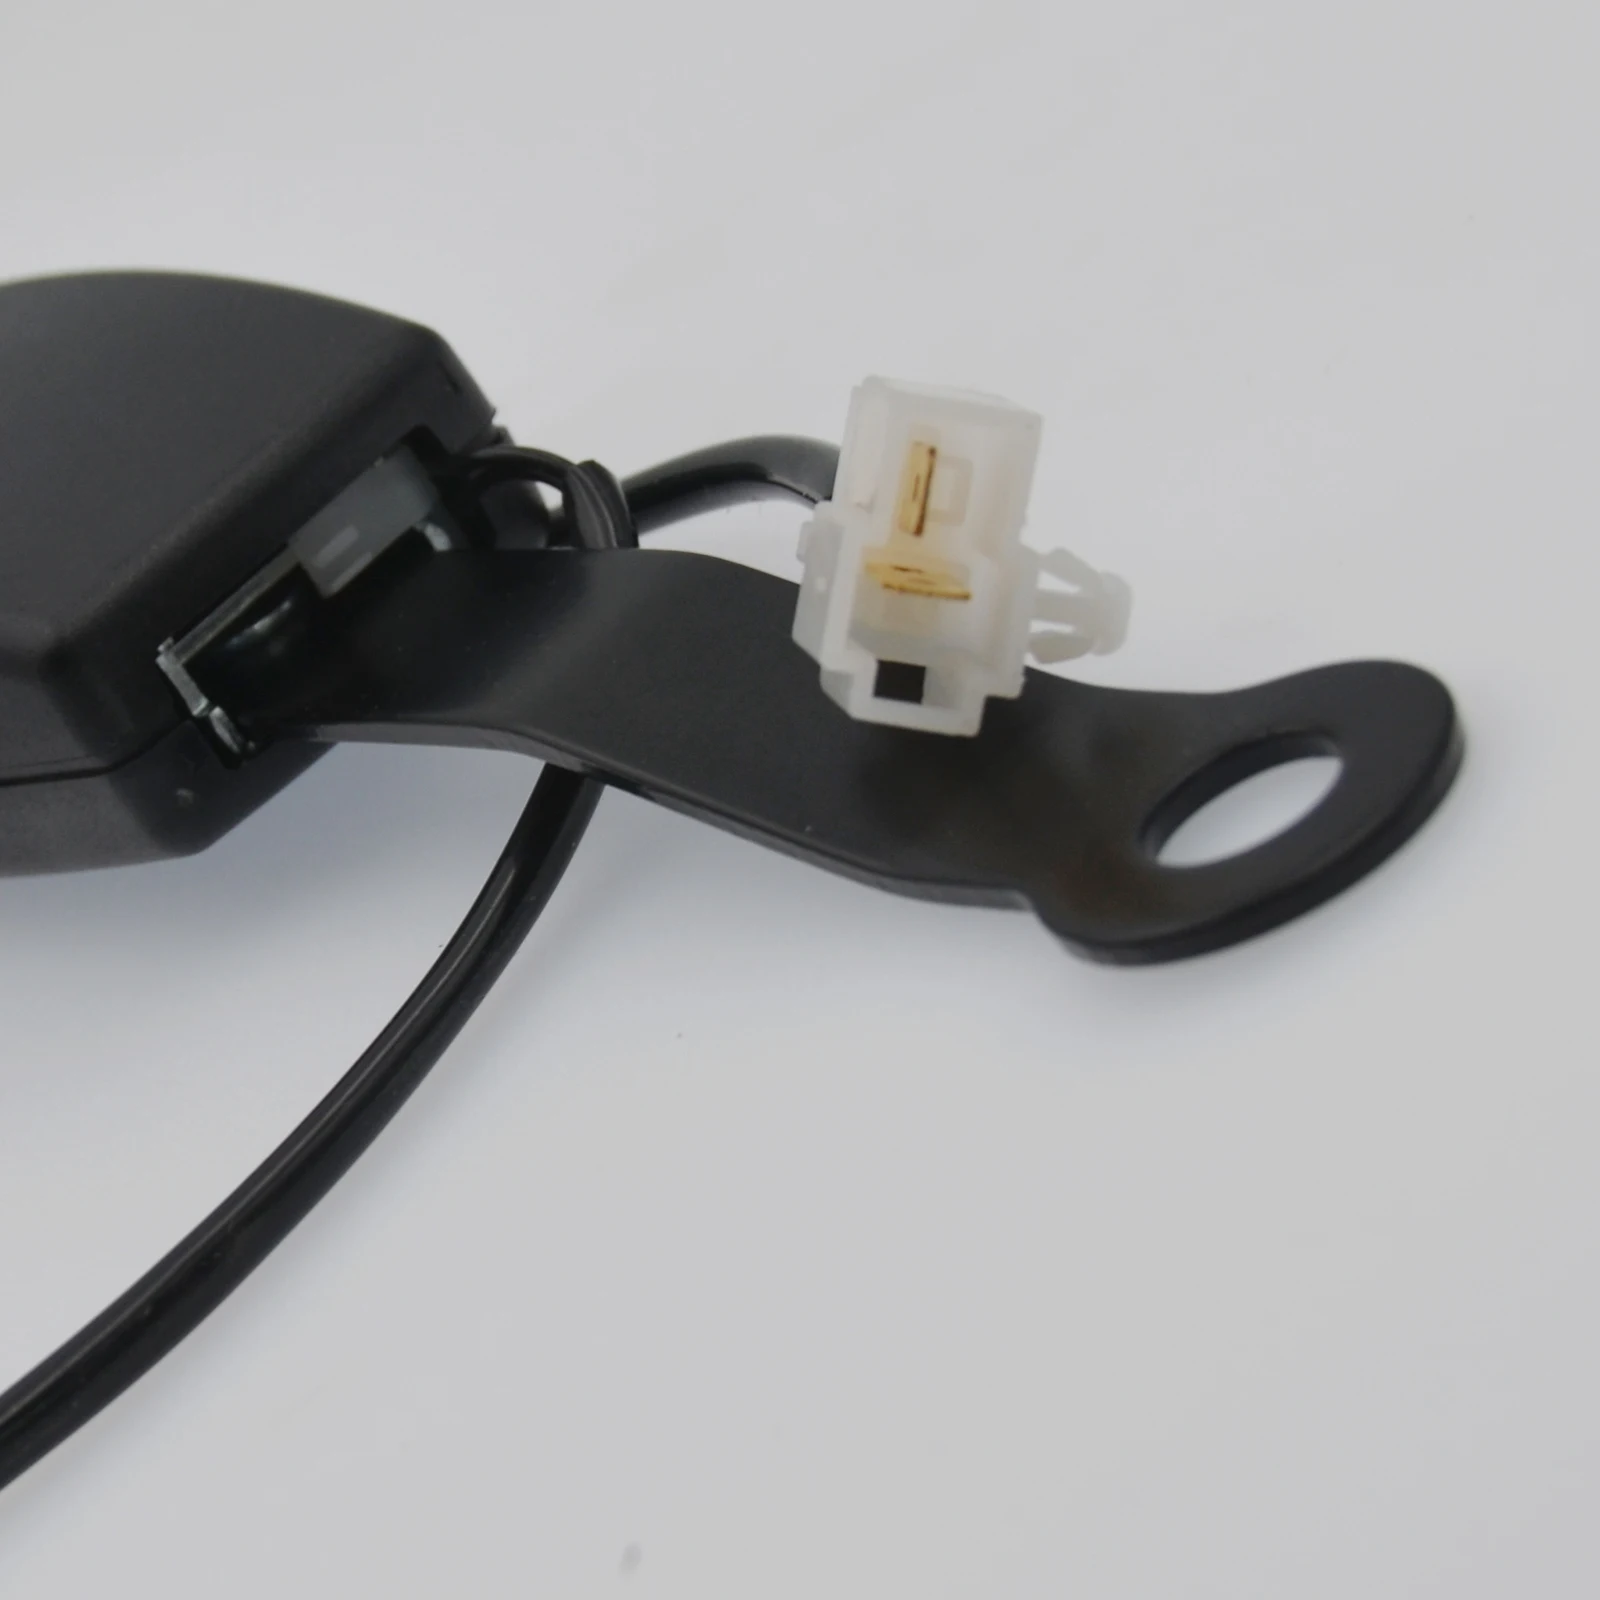 22mm Car   Belt Buckle Socket Plug Connector w/ Warning Cable